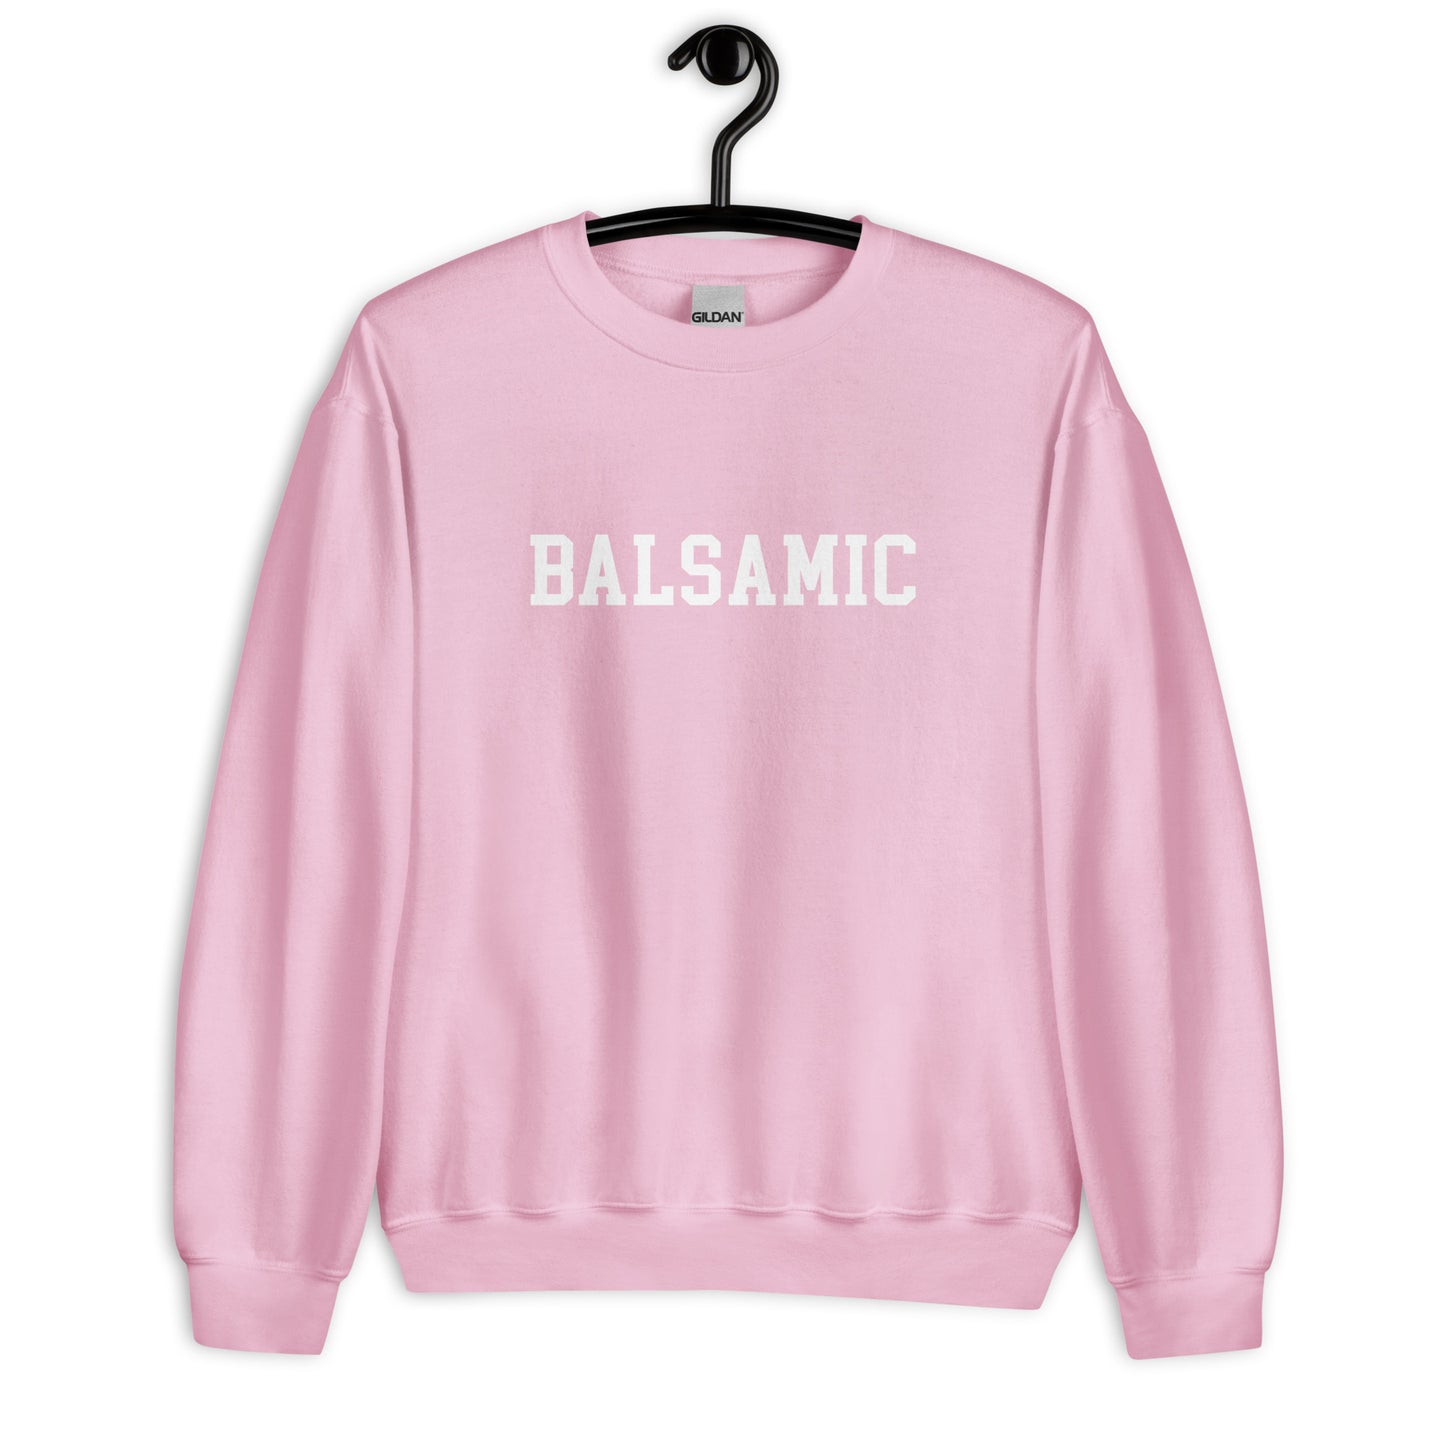 Balsamic Sweatshirt - Straight Font